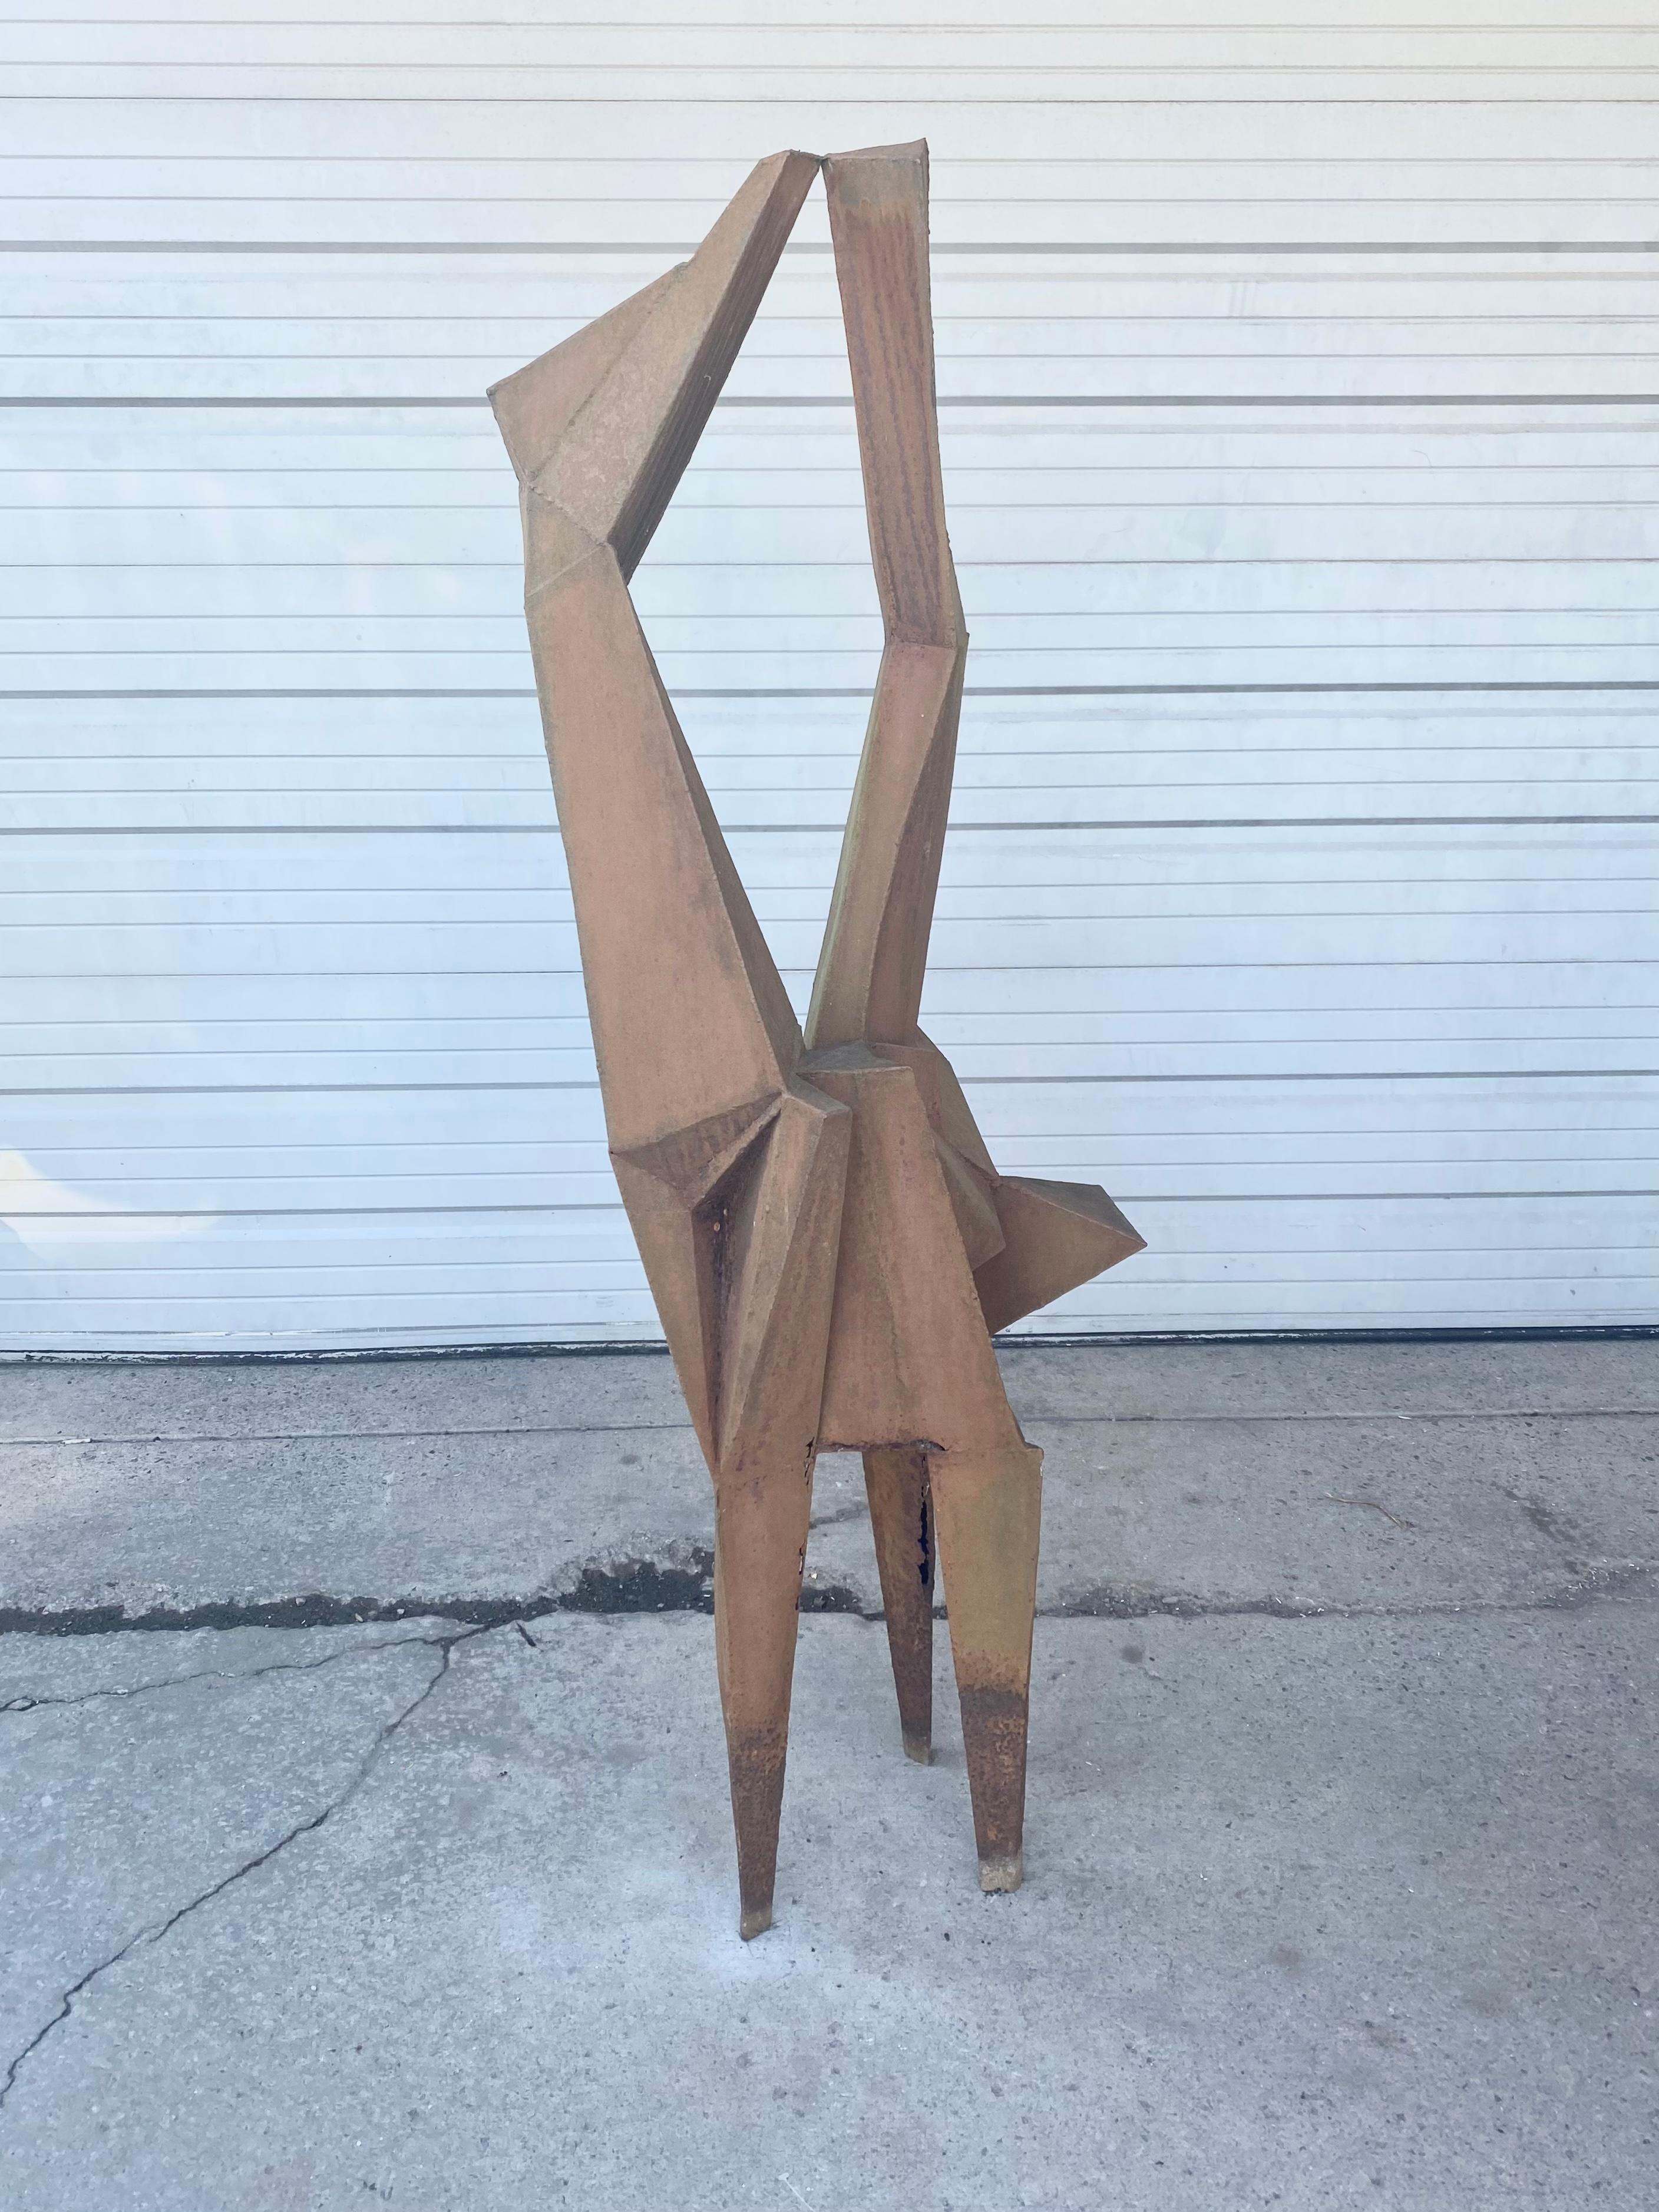 Hand-Crafted Large Welded steel Modernist Sculpture / garden, , manner of Lynn Chadwick